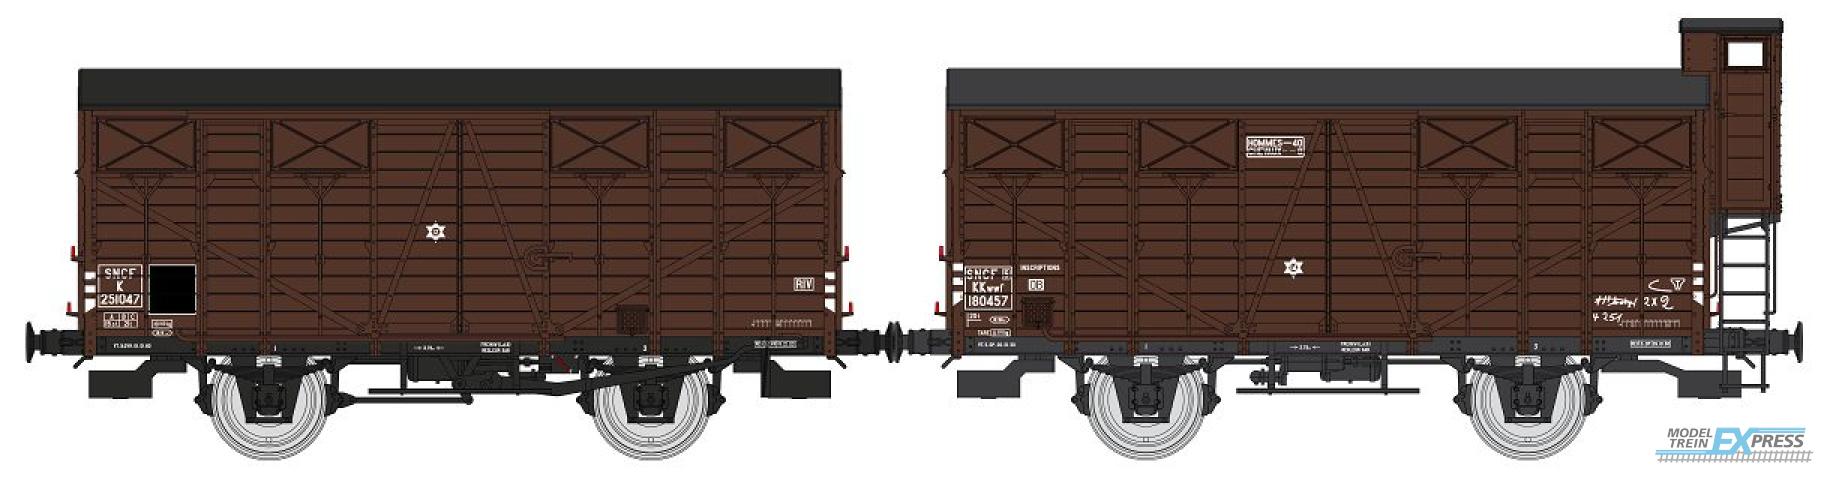 REE models WB-689 SET of 2 CLOSED Wagons OCEM 19, N°K 251047, plain wheels, closed shutters and N°KKwwf 180457, plain wheels, closed